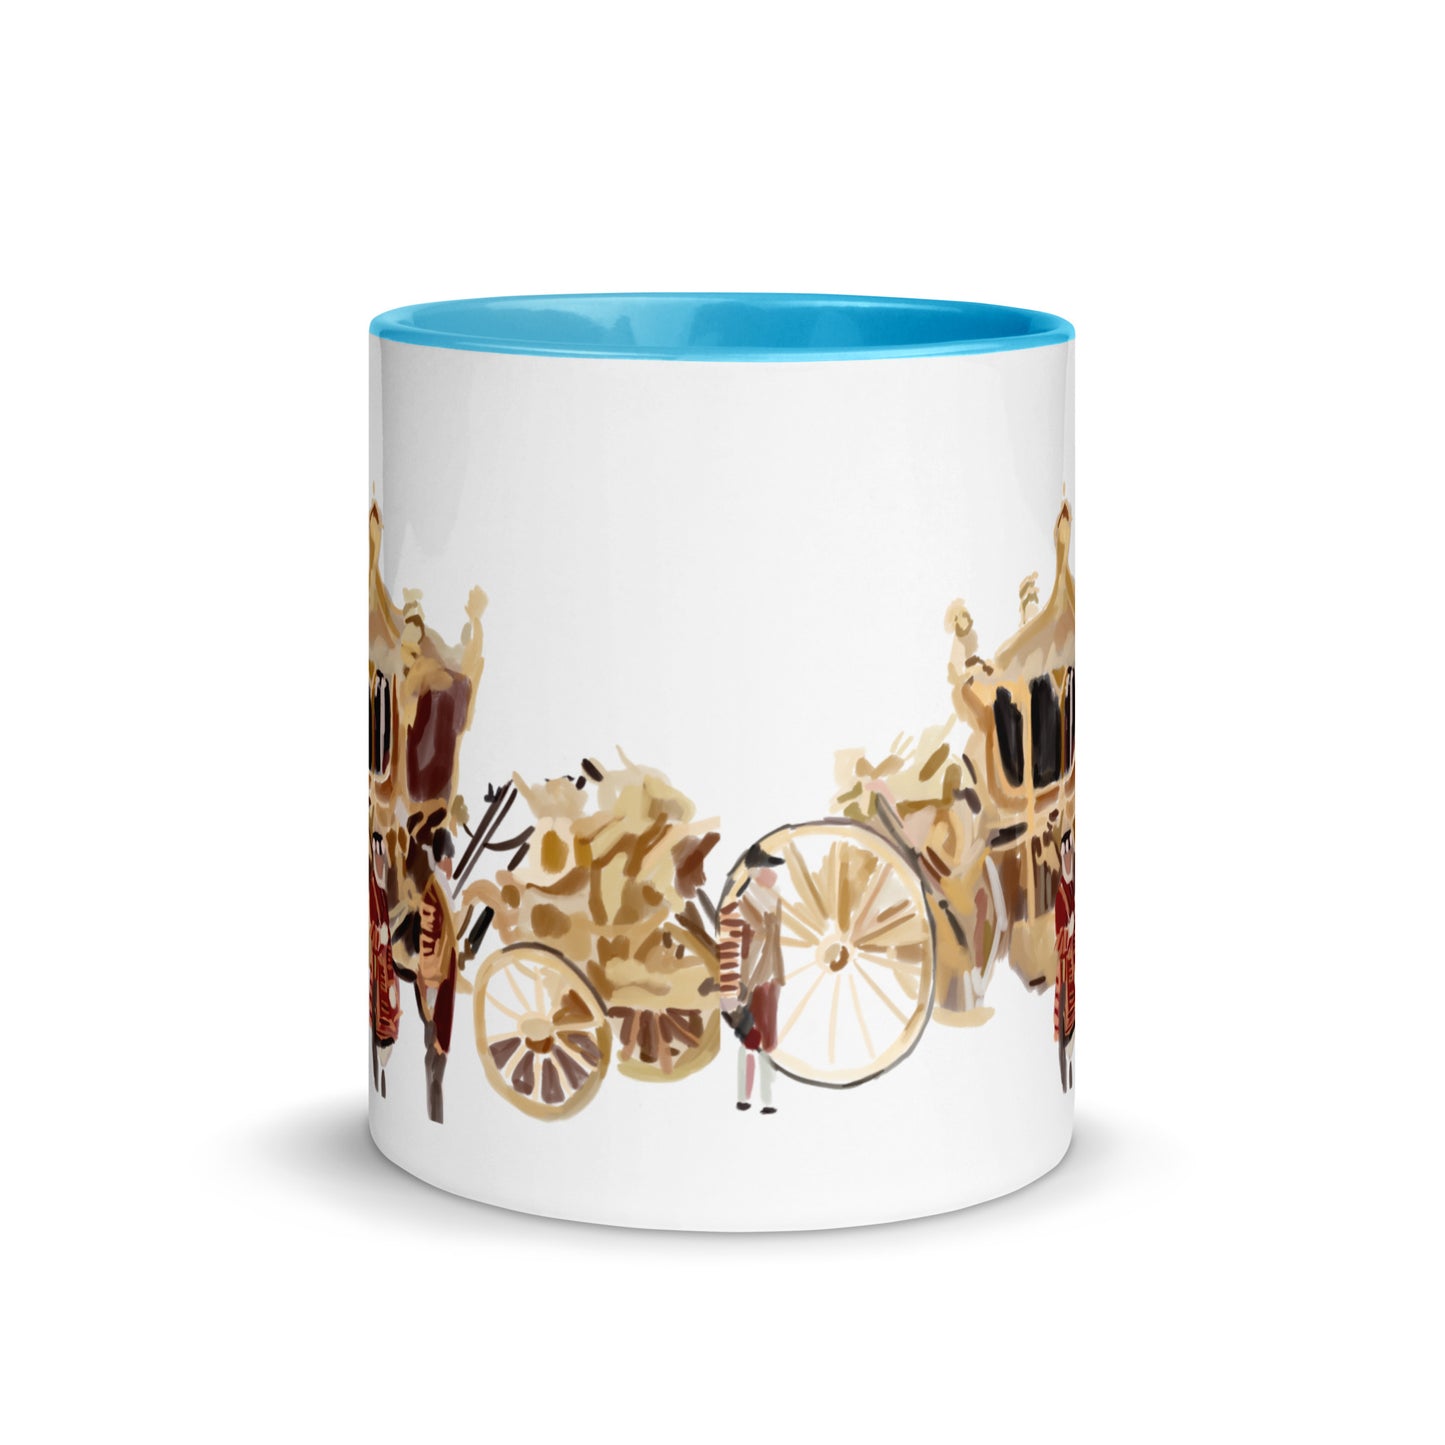 Golden Carriage Mug with Color Inside